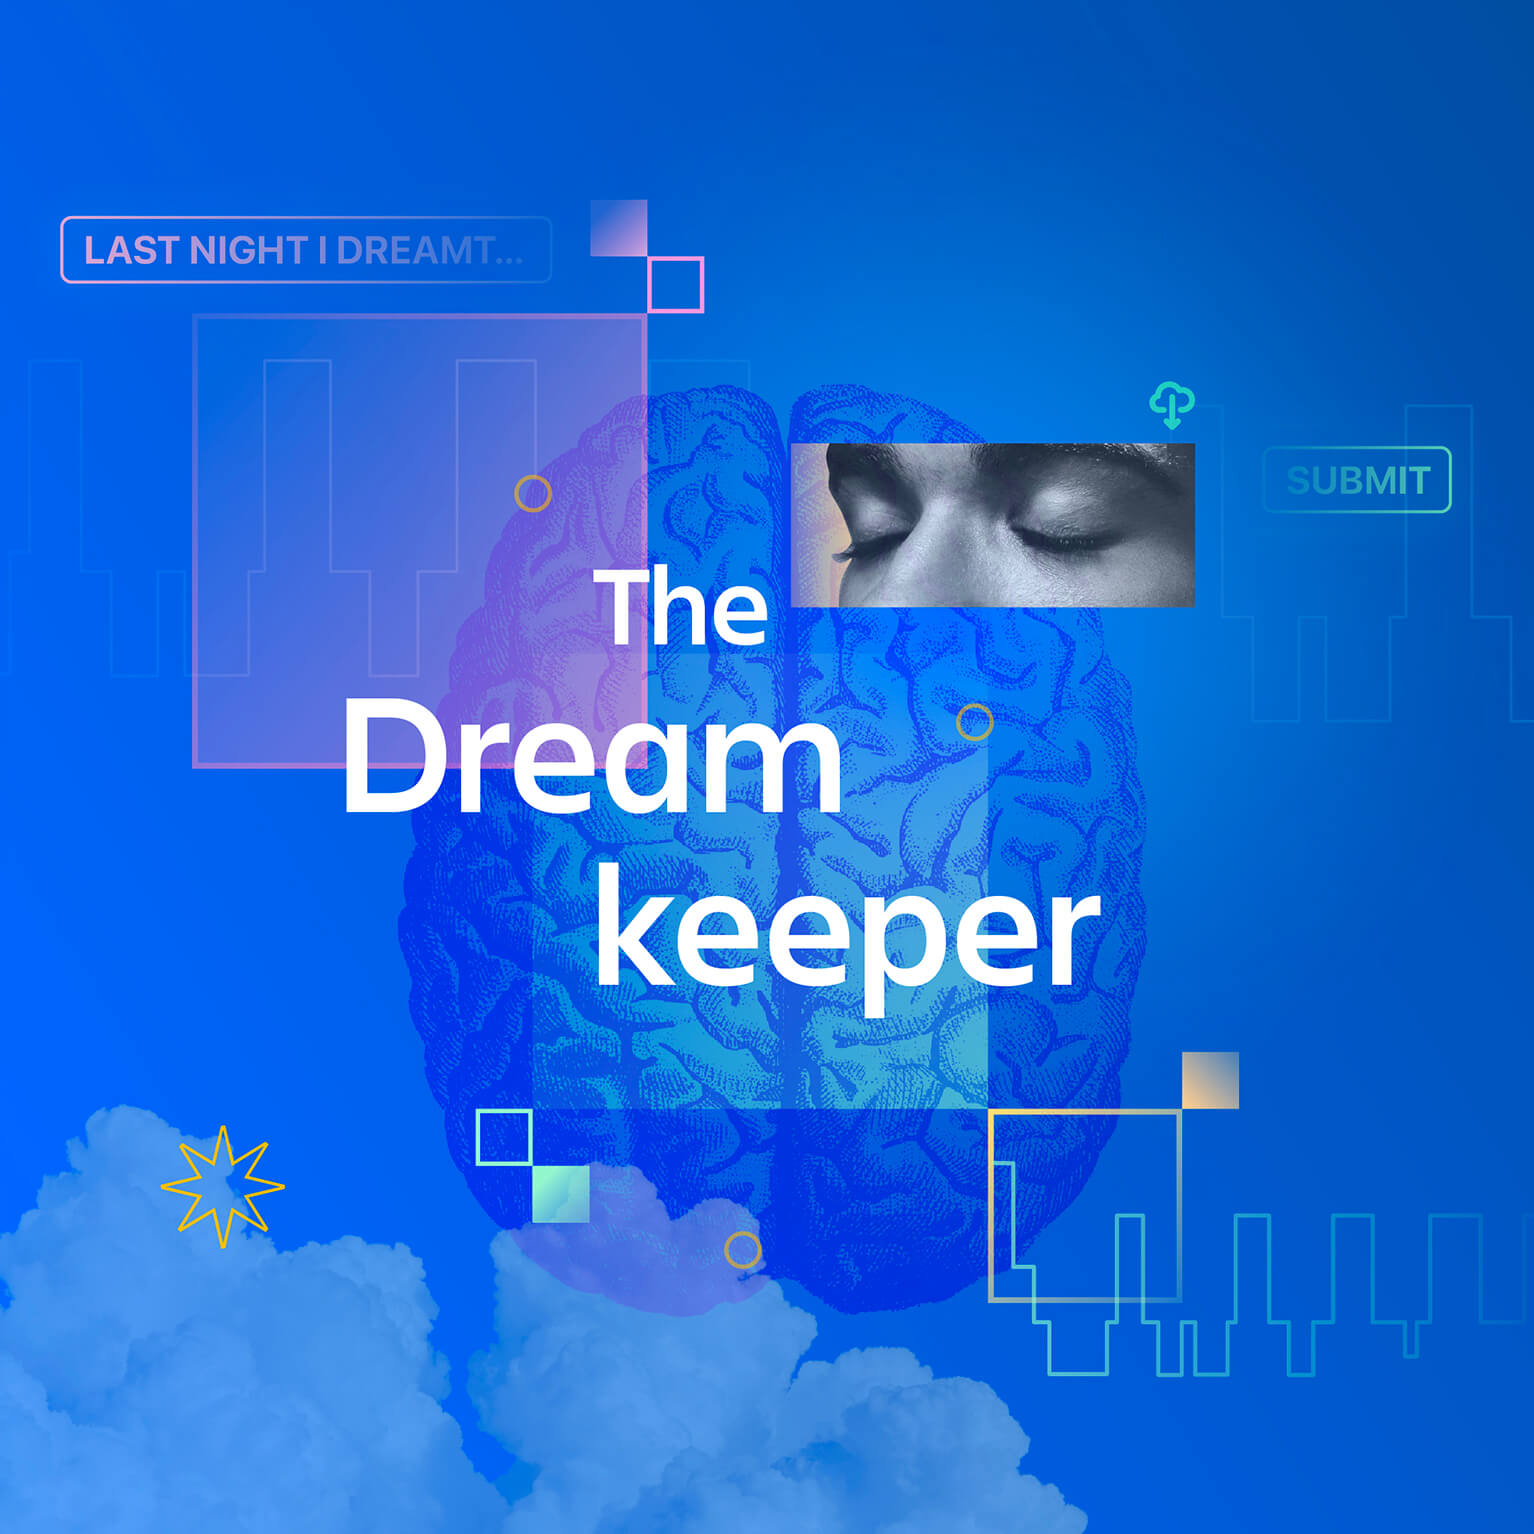 The Dreamkeeper illustration